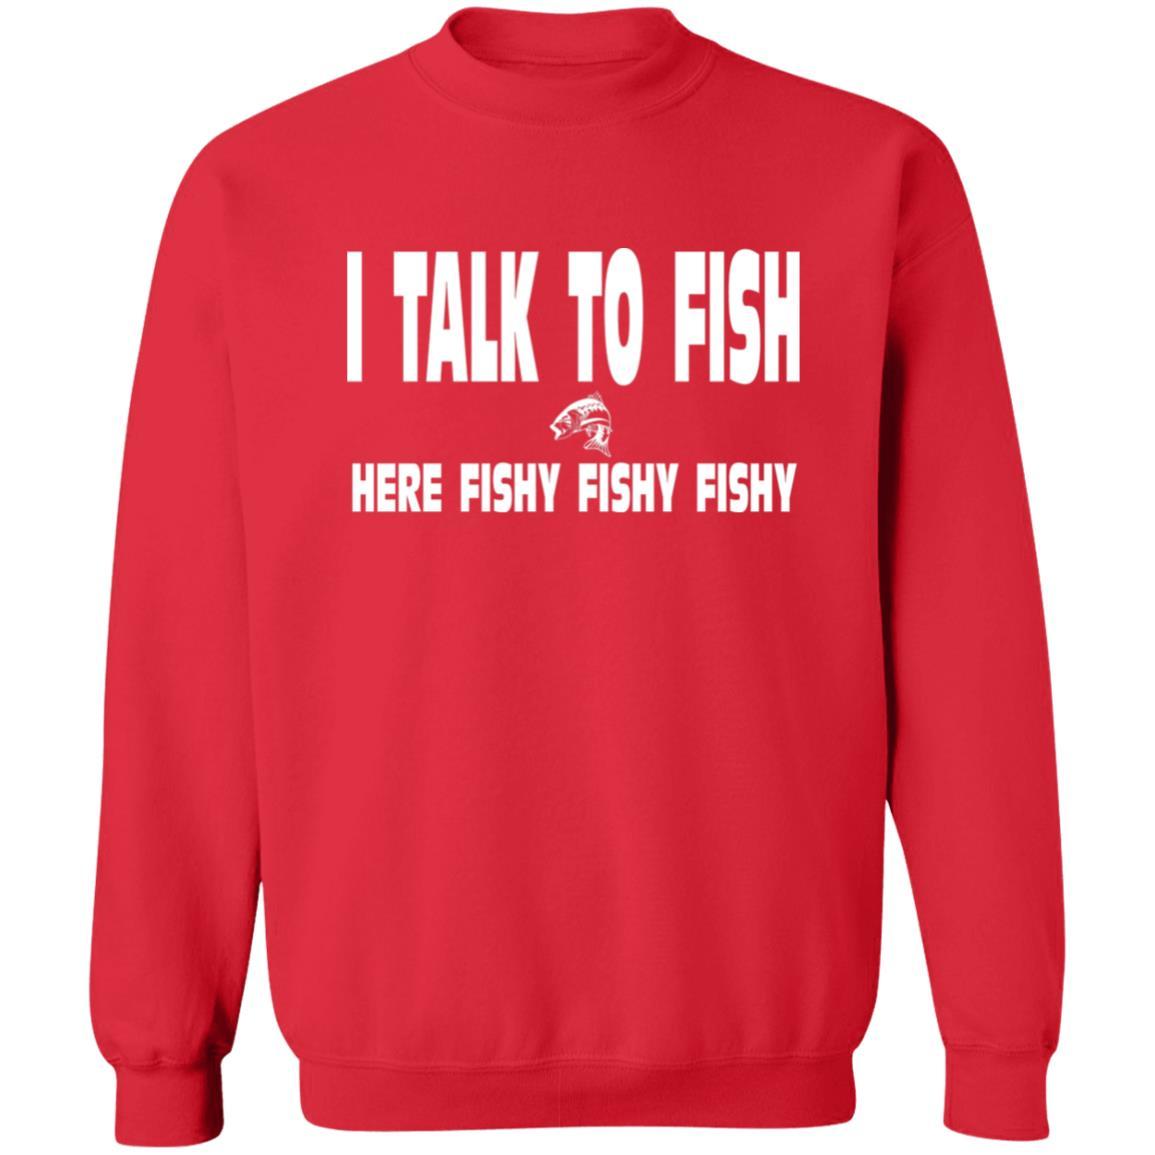 I talk to fish here fishy fishy sweatshirt red